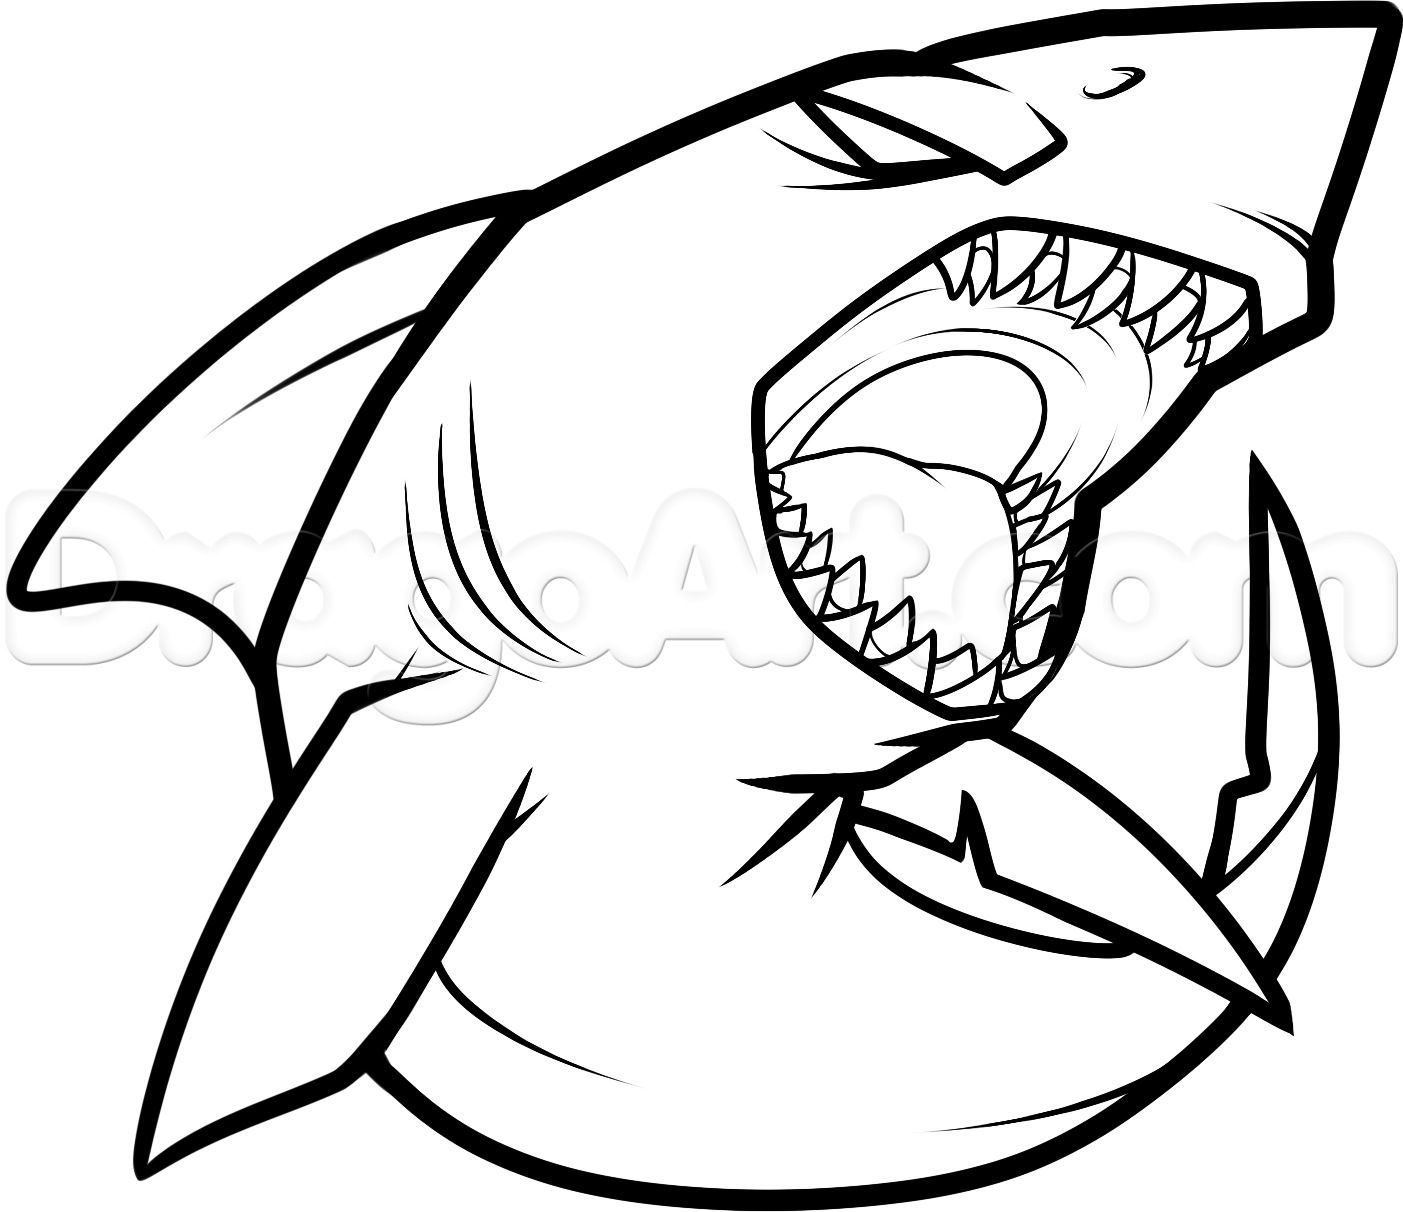 Shark bite clip art clipart